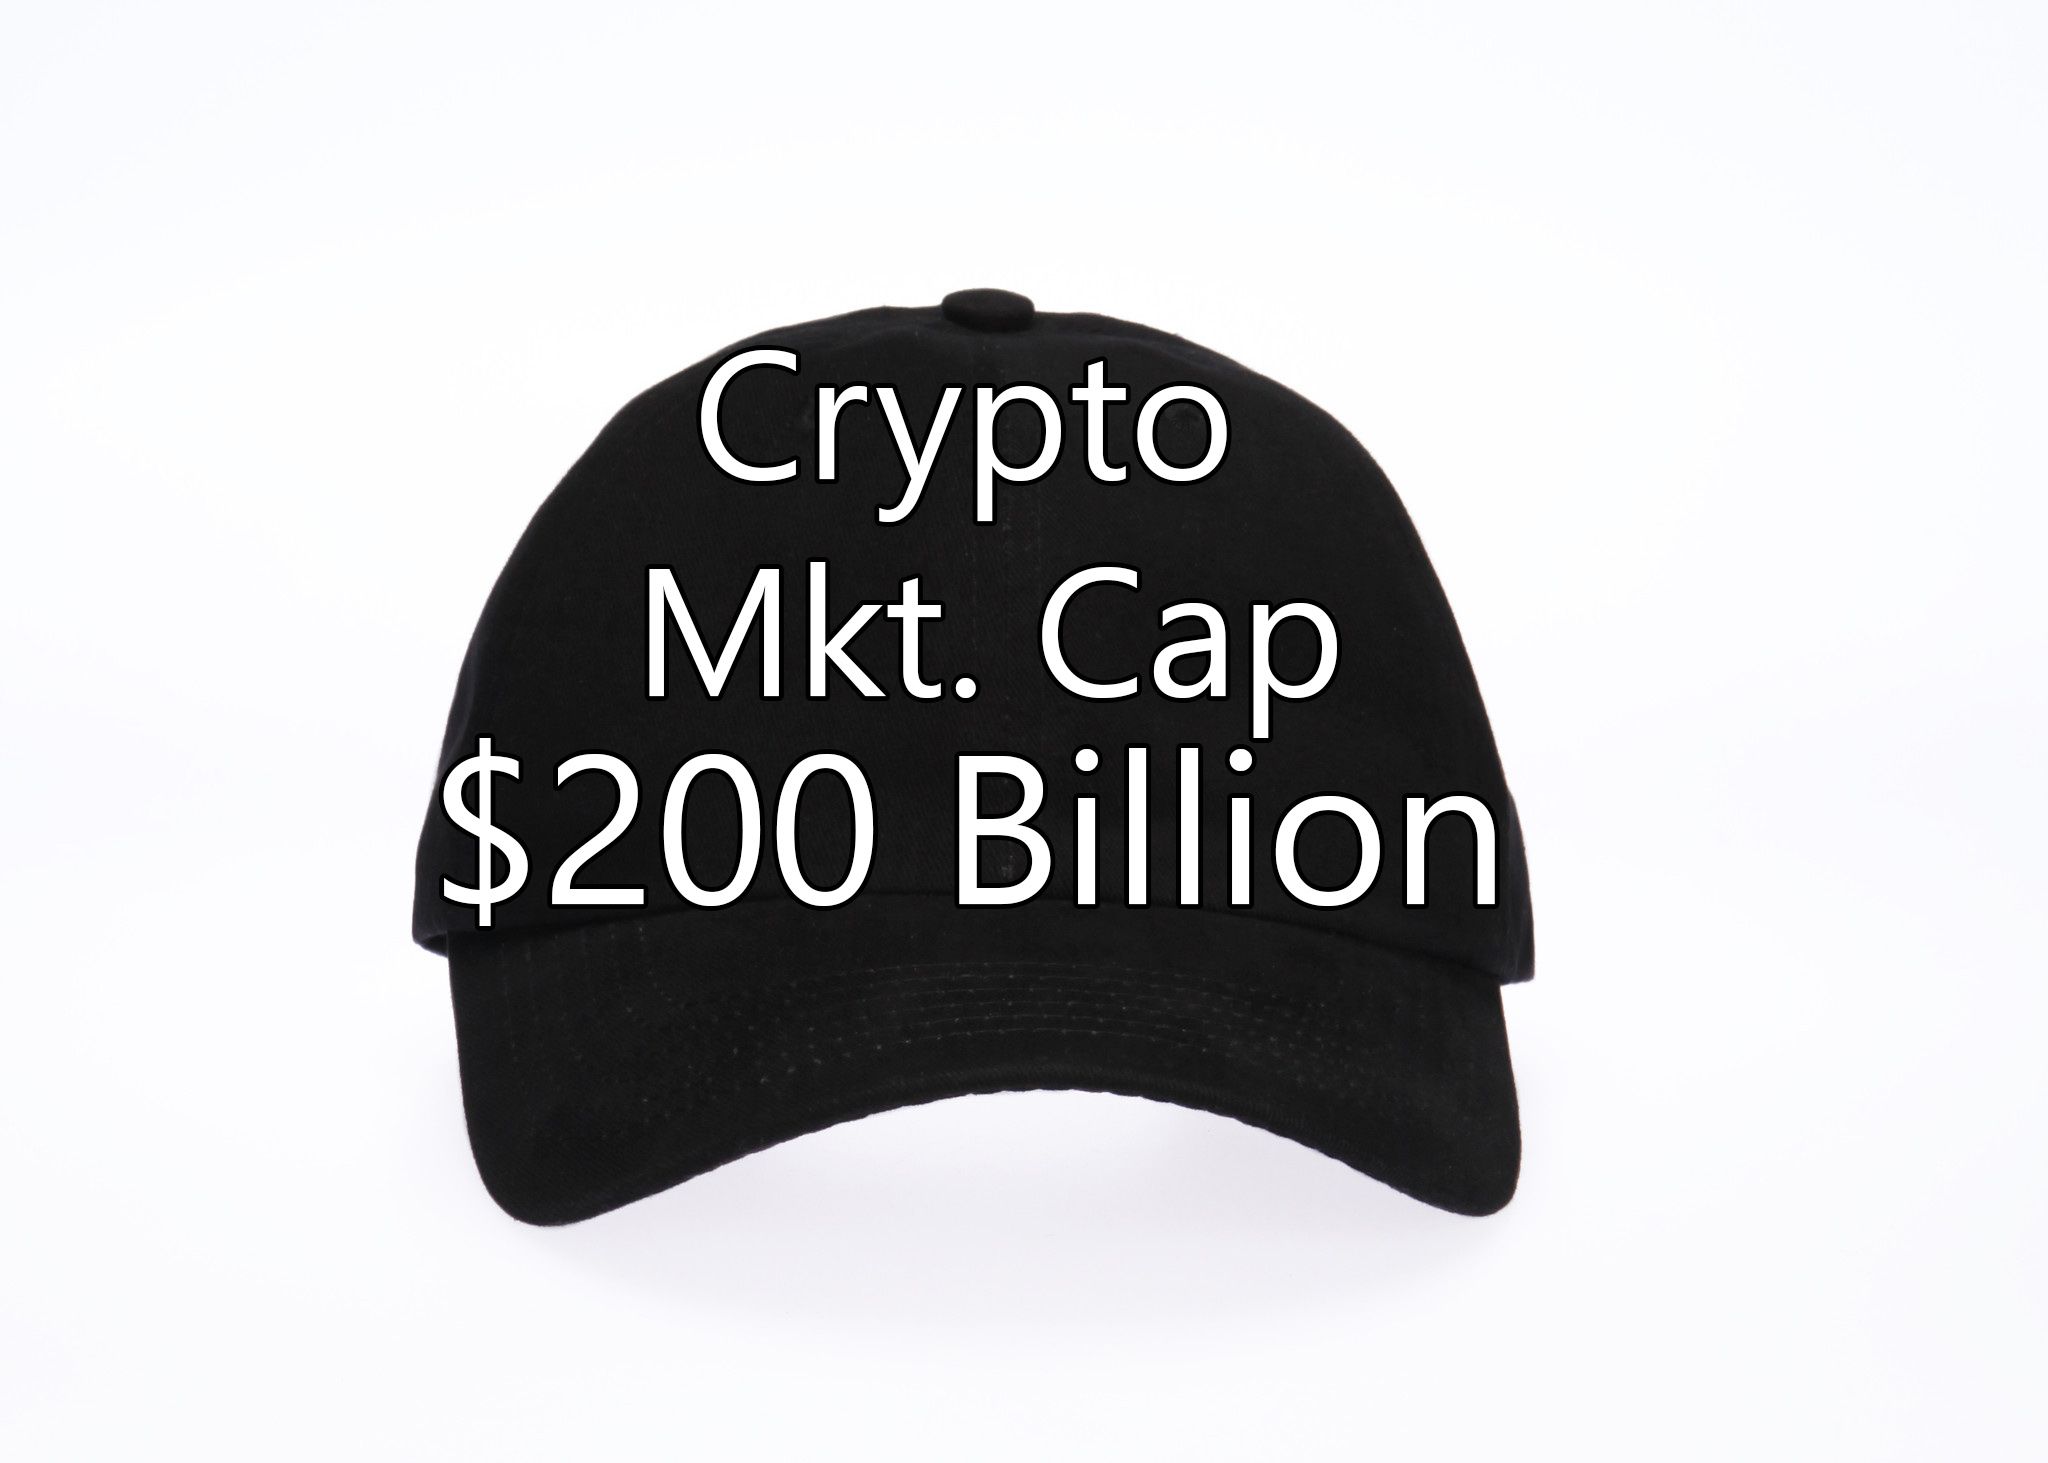 Market 'cap' feature foto.jpg